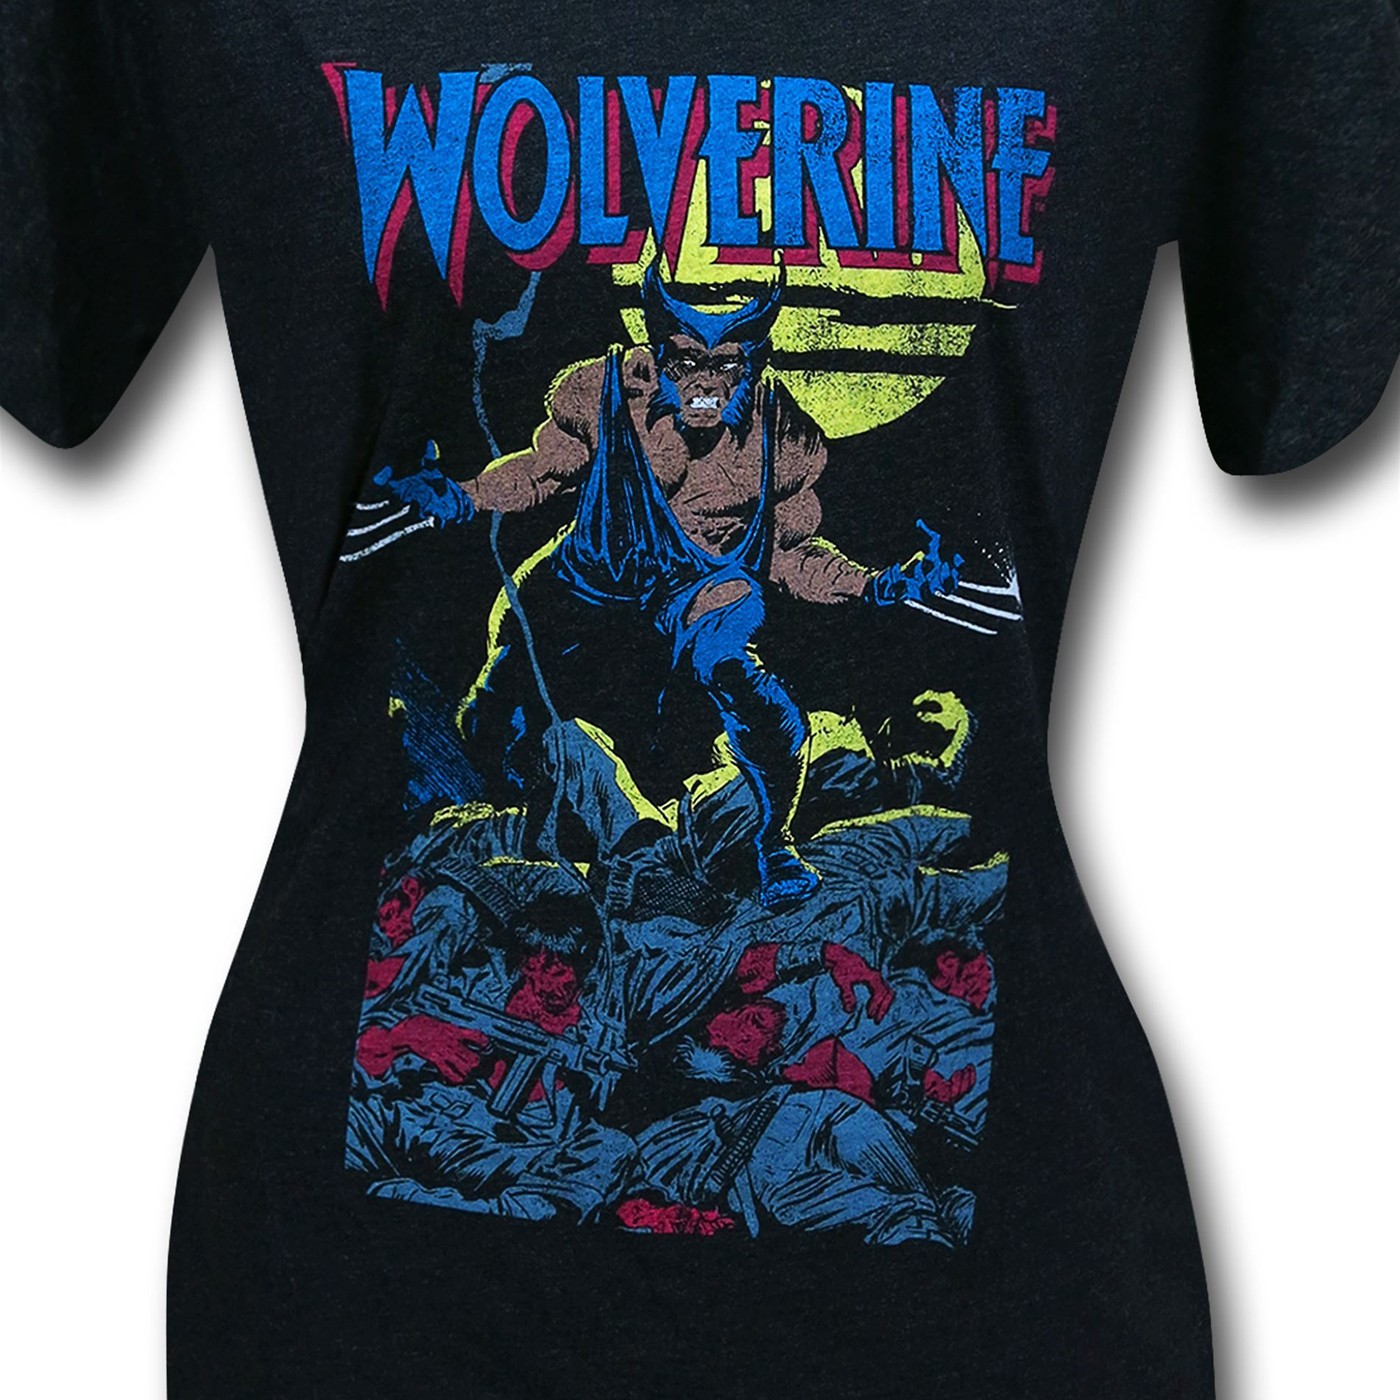 Wolverine No. 1 Tri-Blend Dolman Women's T-Shirt